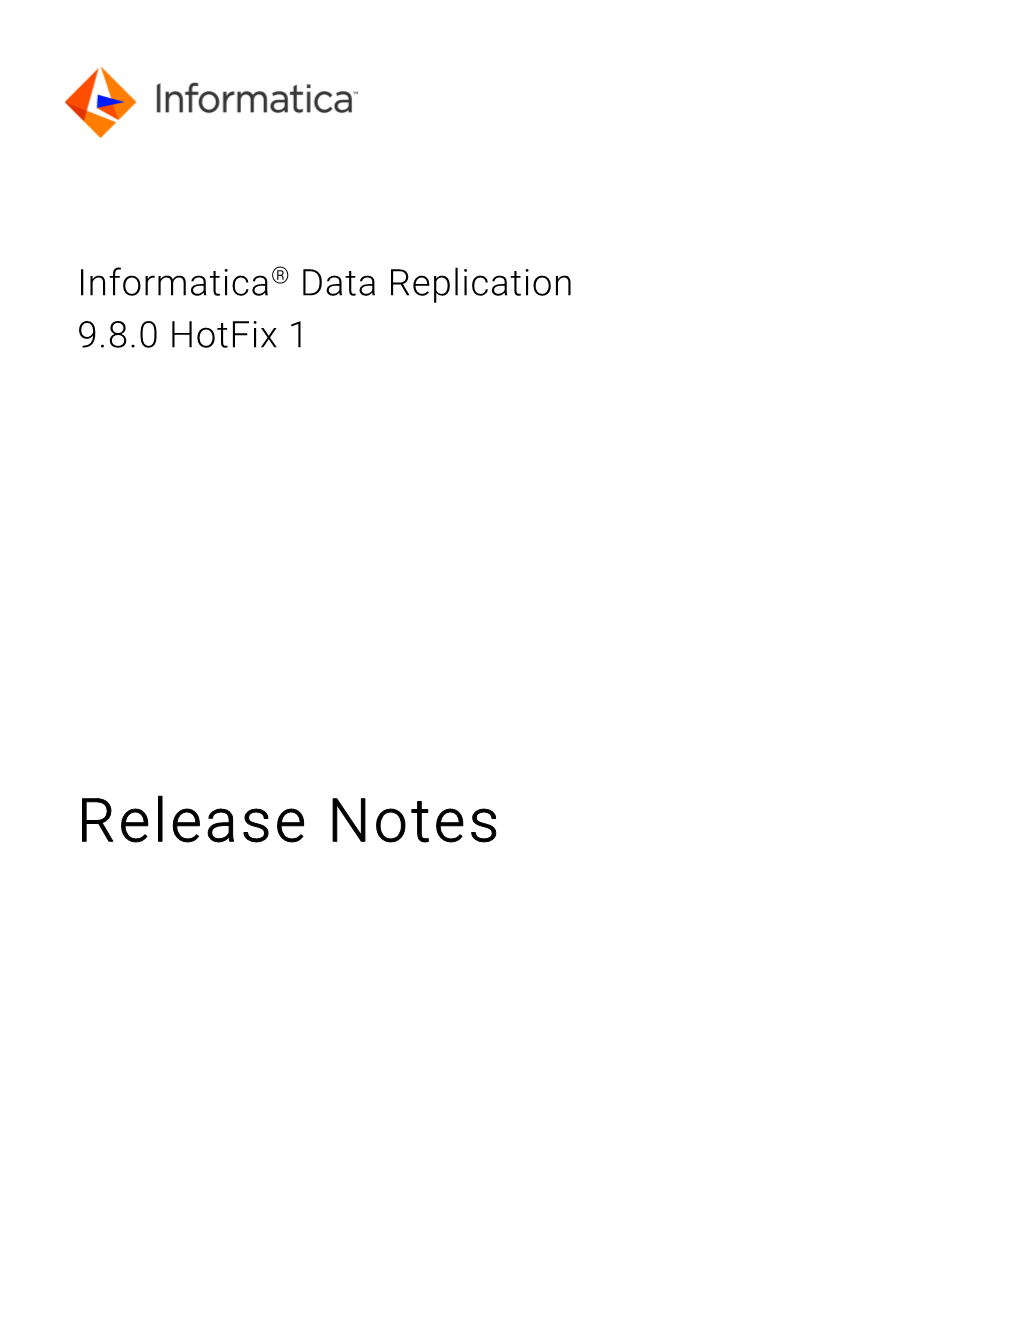 Informatica Data Replication Release Notes 9.8.0 Hotfix 1 March 2019 © Copyright Informatica LLC 2019